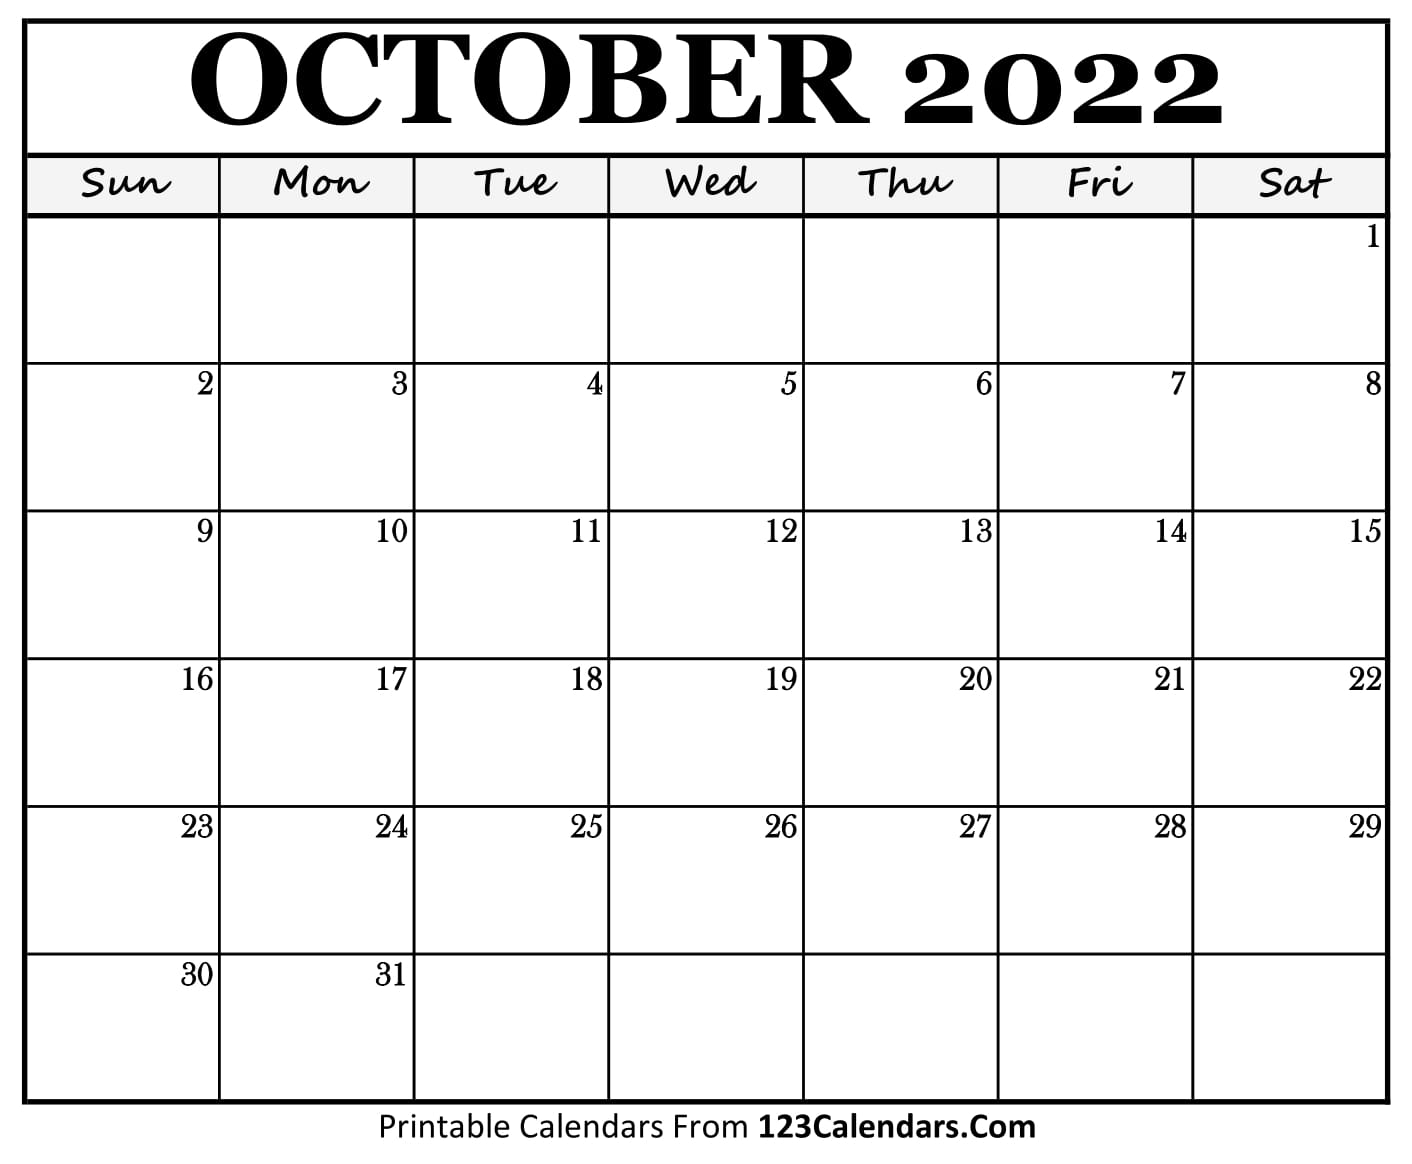 printable october 2022 calendar templates 123calendars com